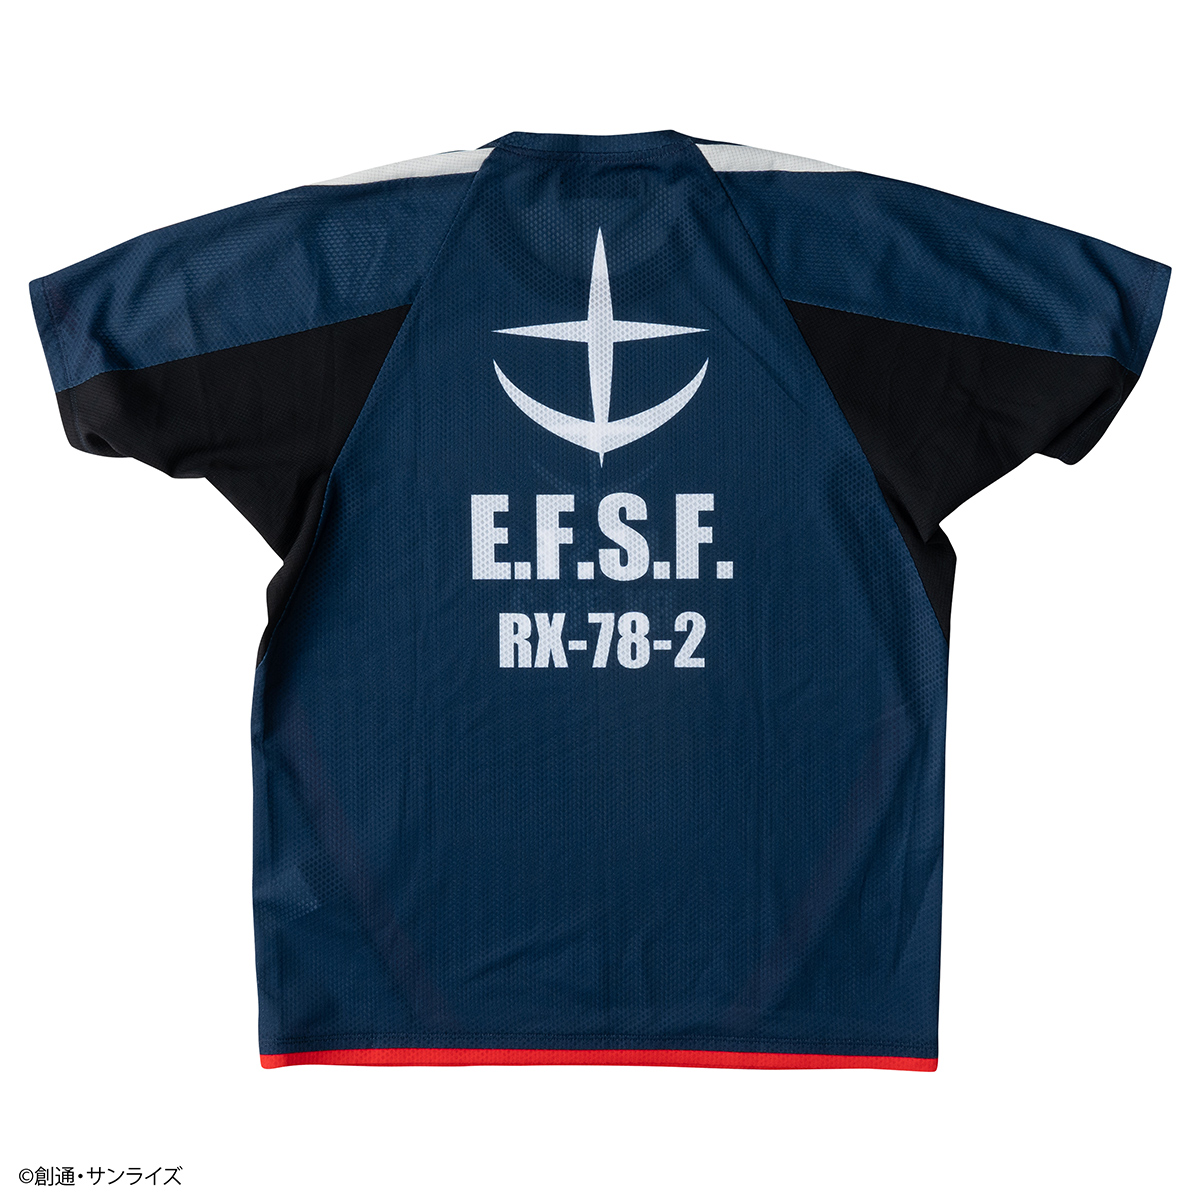 STRICT-G KUSHITANI『機動戦士ガンダム』KITTLE Tシャツ GUNDAMモデル